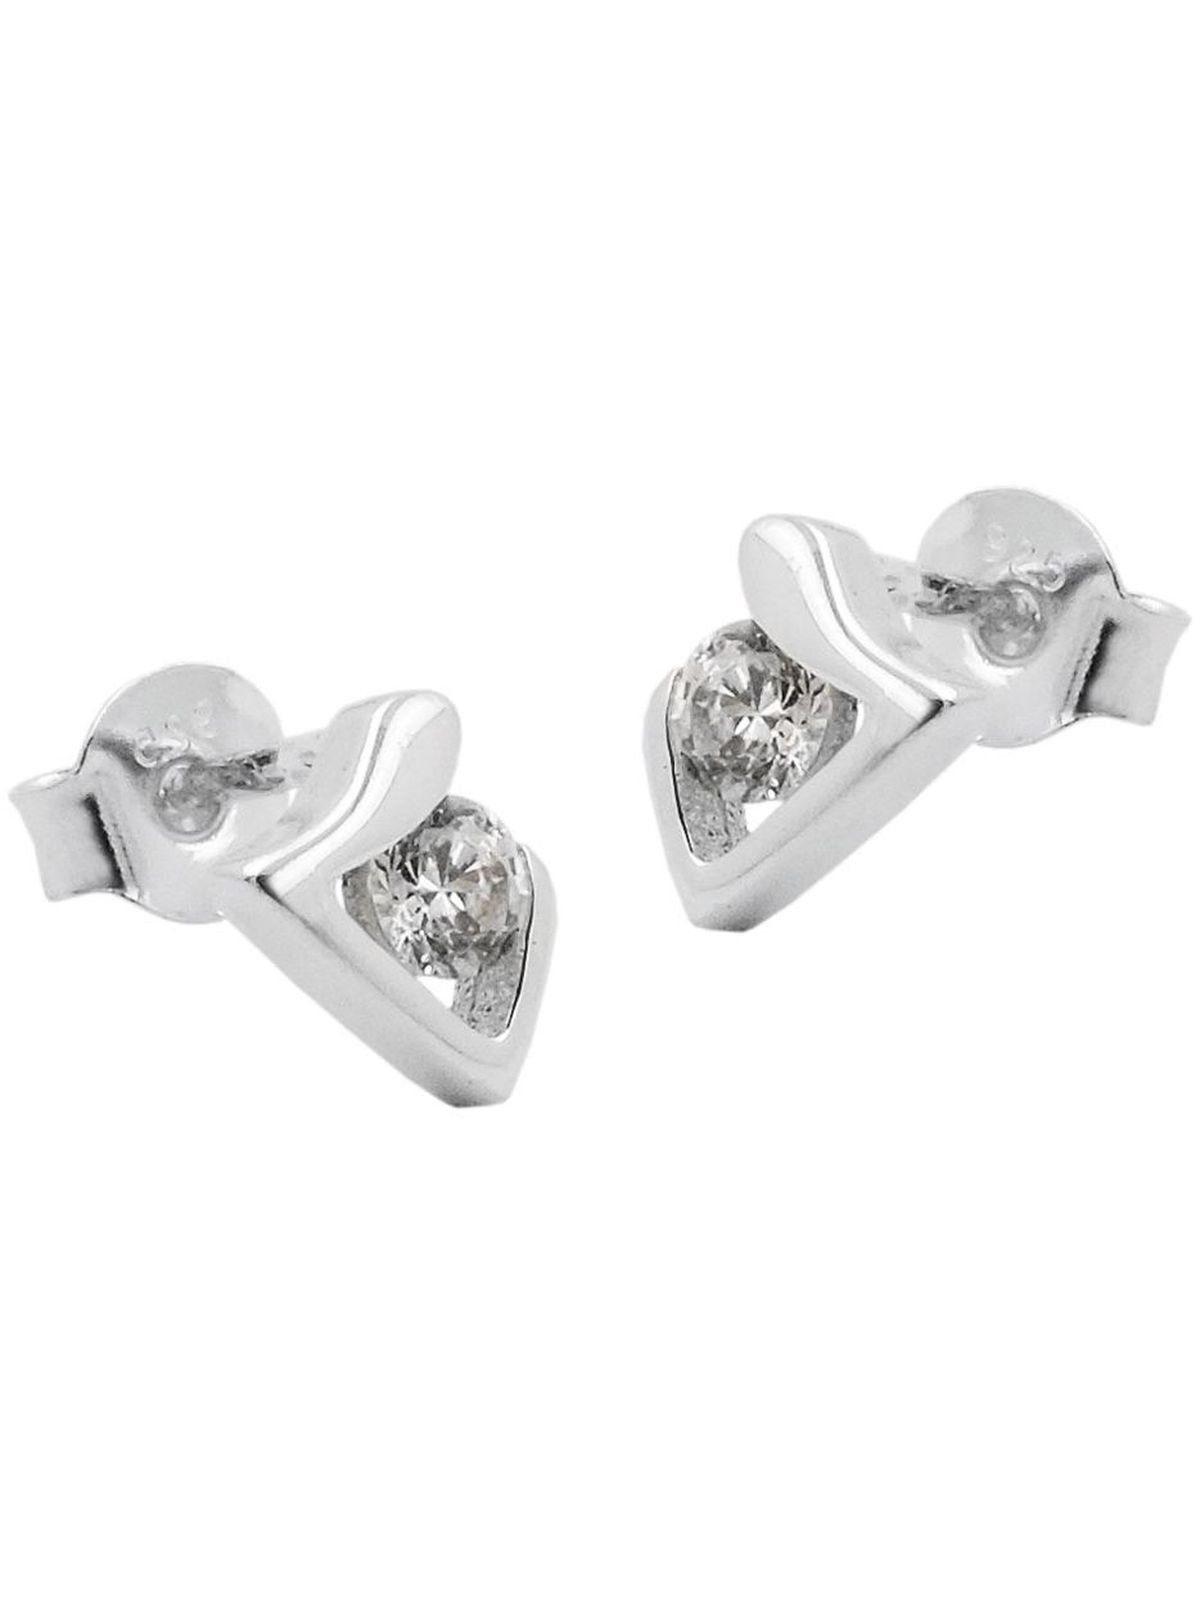 (1-tlg) Zirkonia Gallay mit Silber 925 dreieckig 7x5mm Ohrring glänzend Paar Ohrstecker